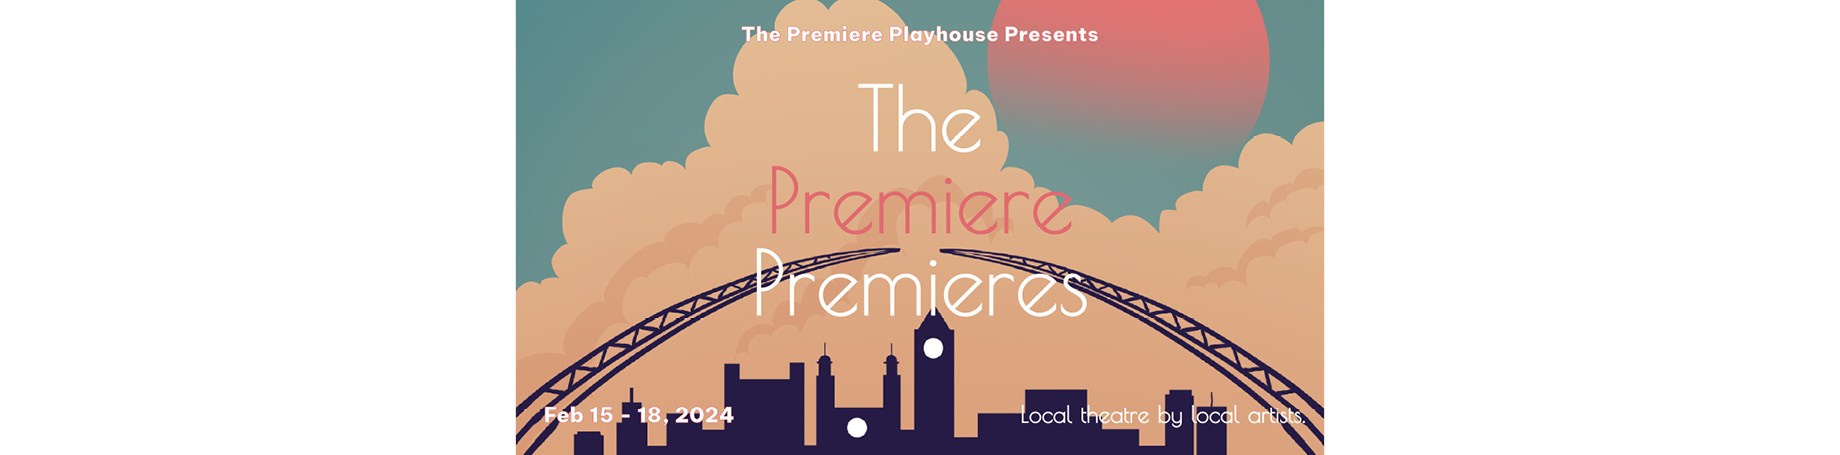 The Premiere Playhouse presents The Premiere Premieres